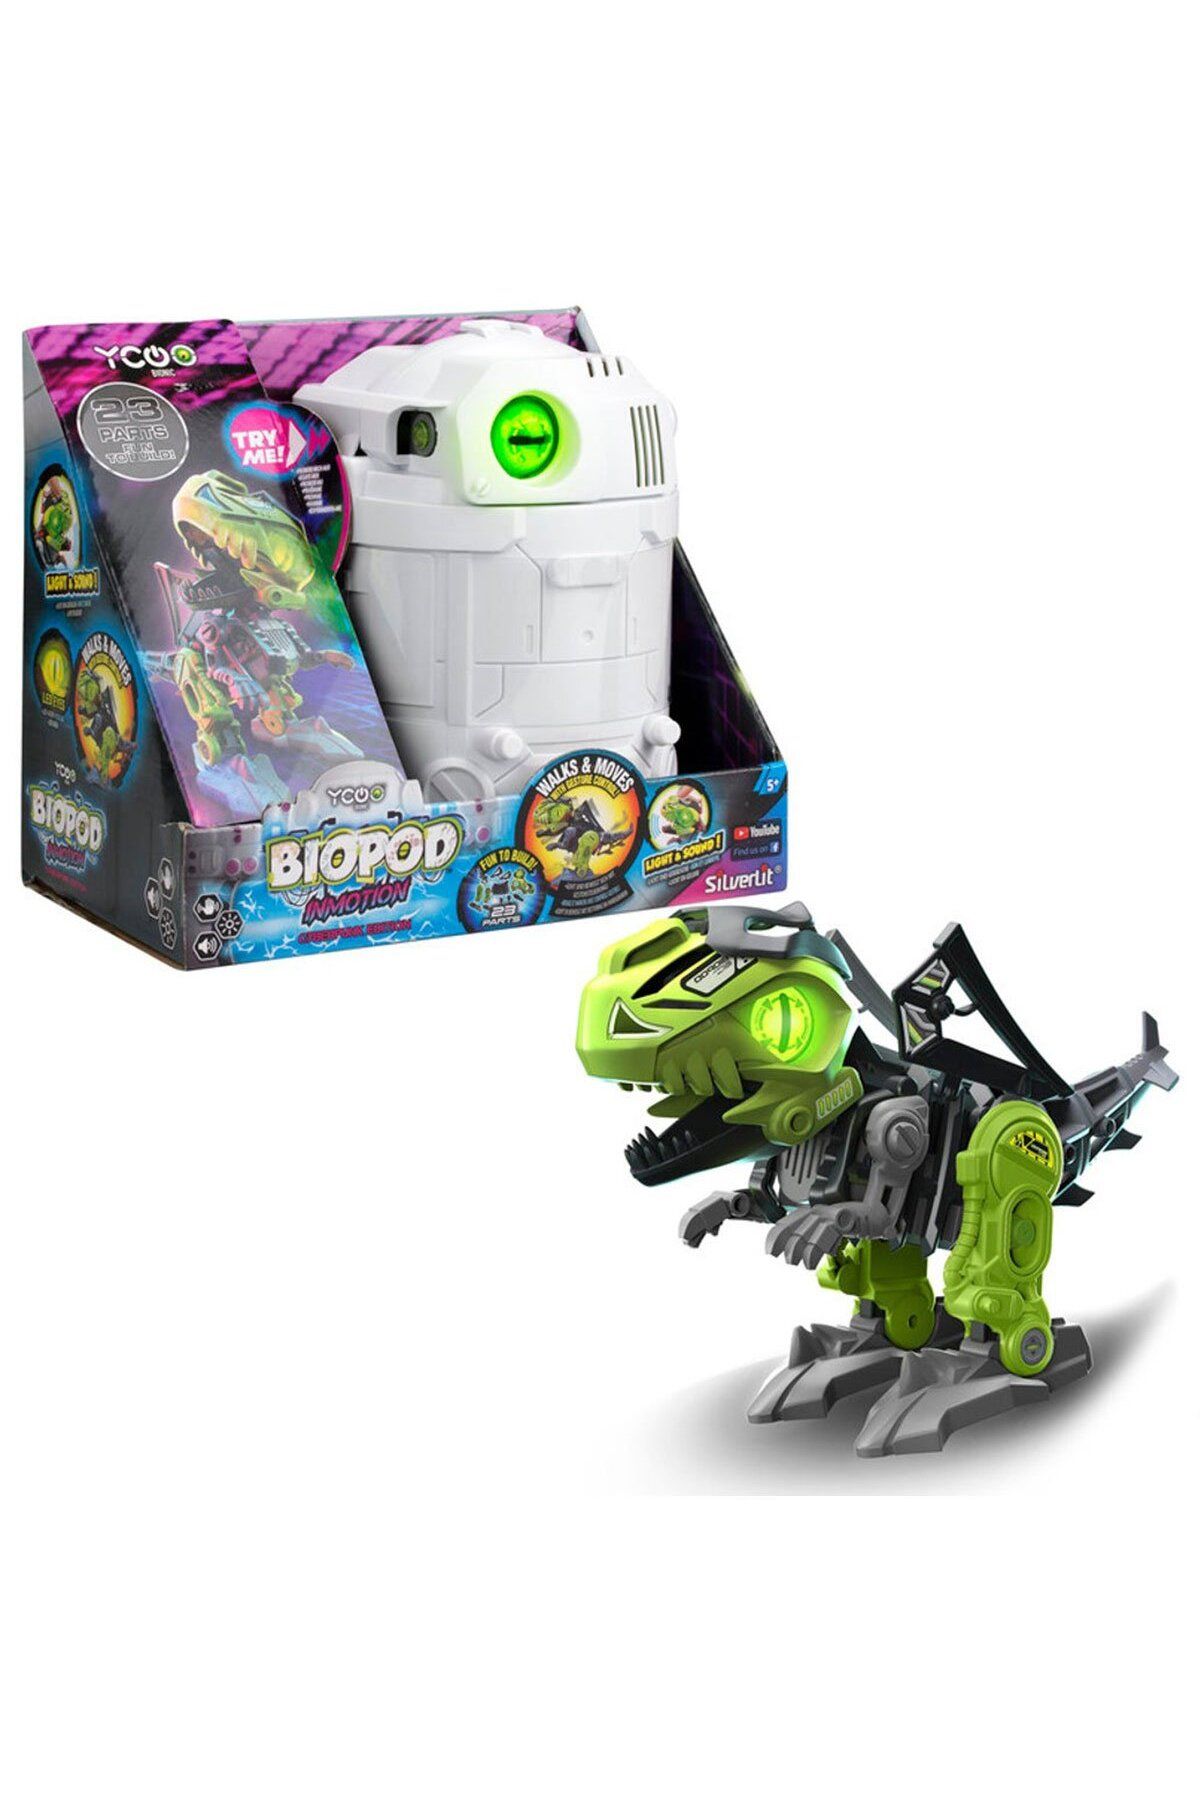 Silverlit Biopod Inmotion Cyberpunk Dinozor Robot